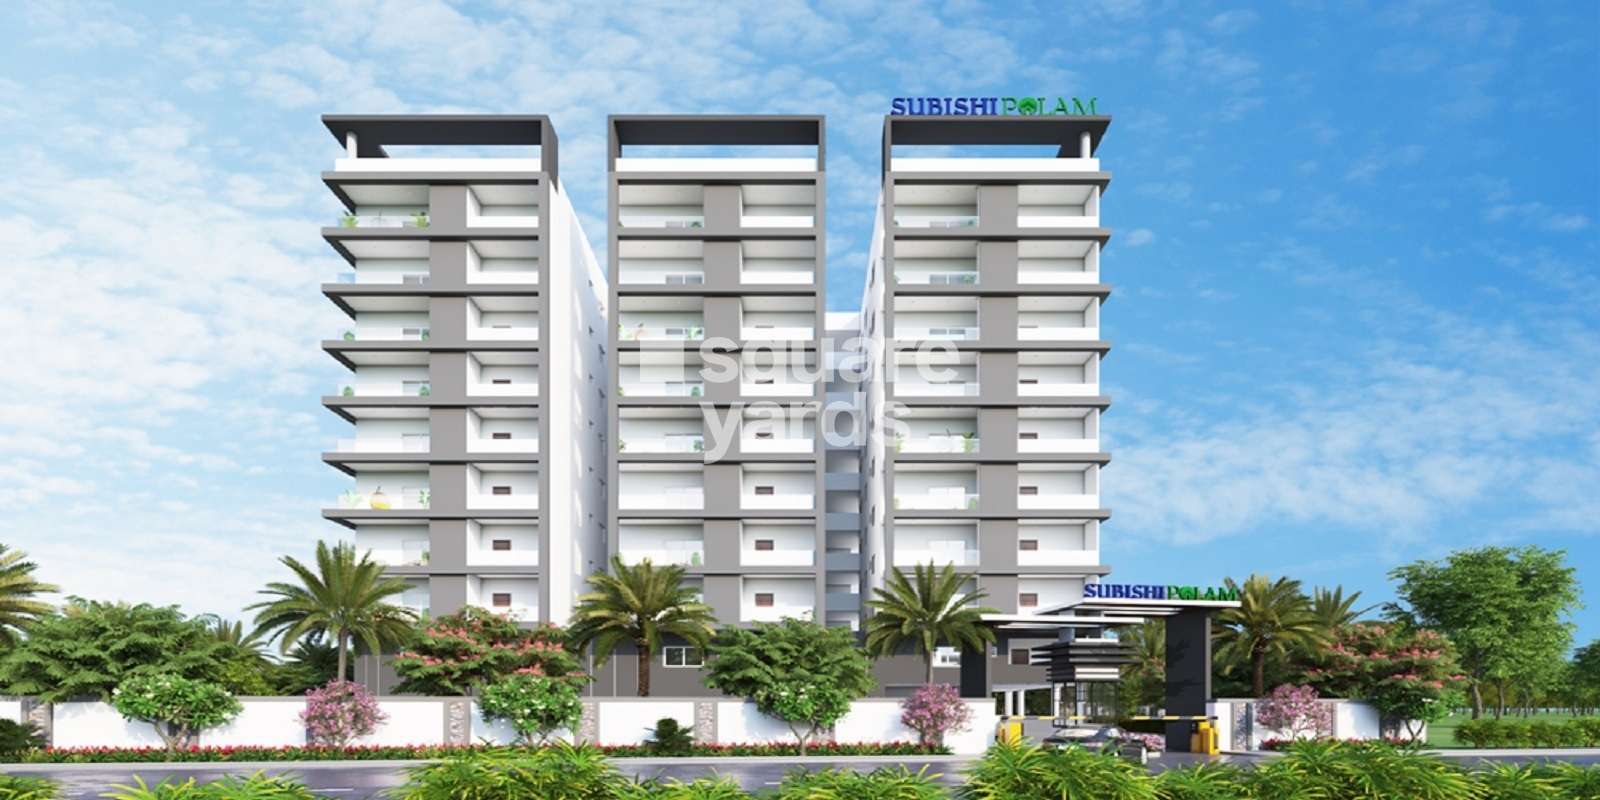 Subishis Polam Luxury Apartments Cover Image